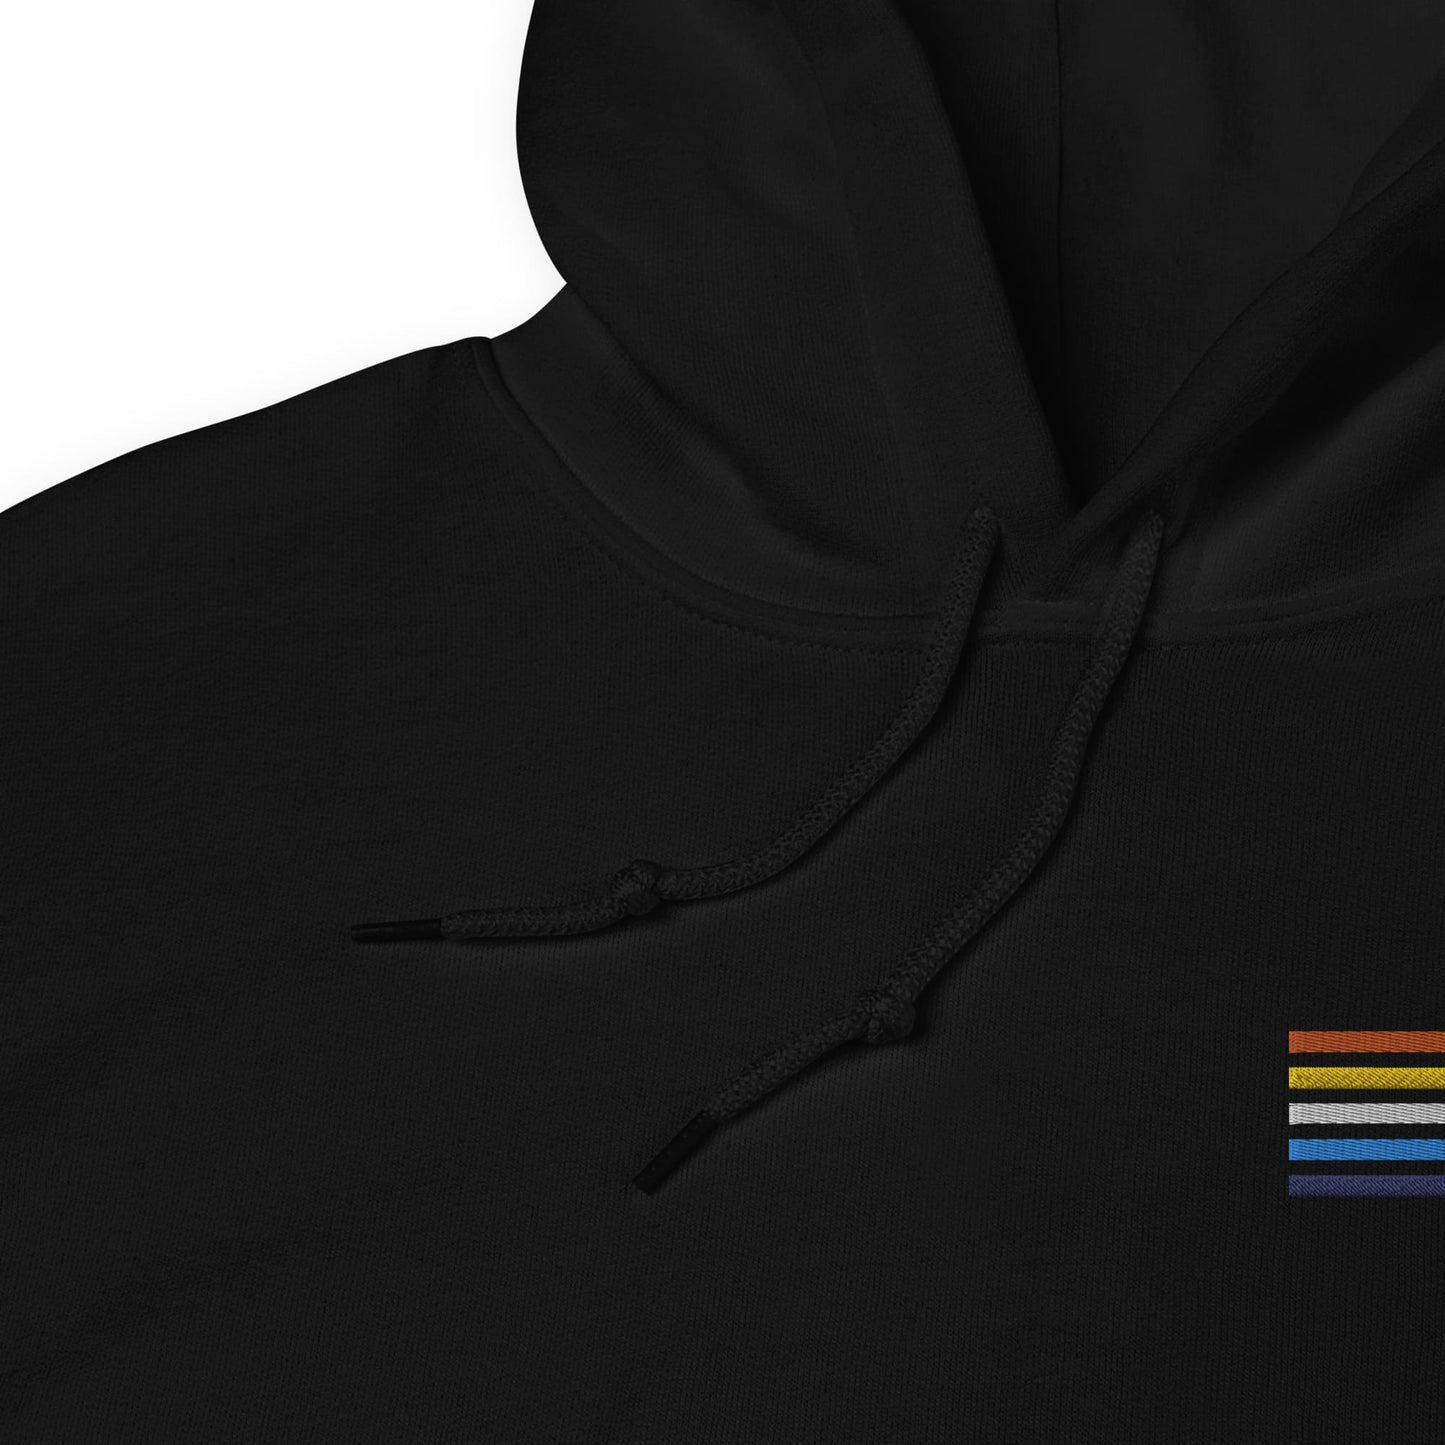 aroace hoodie, subtle aro ace pride flag embroidered pocked design hooded sweatshirt, detail strings